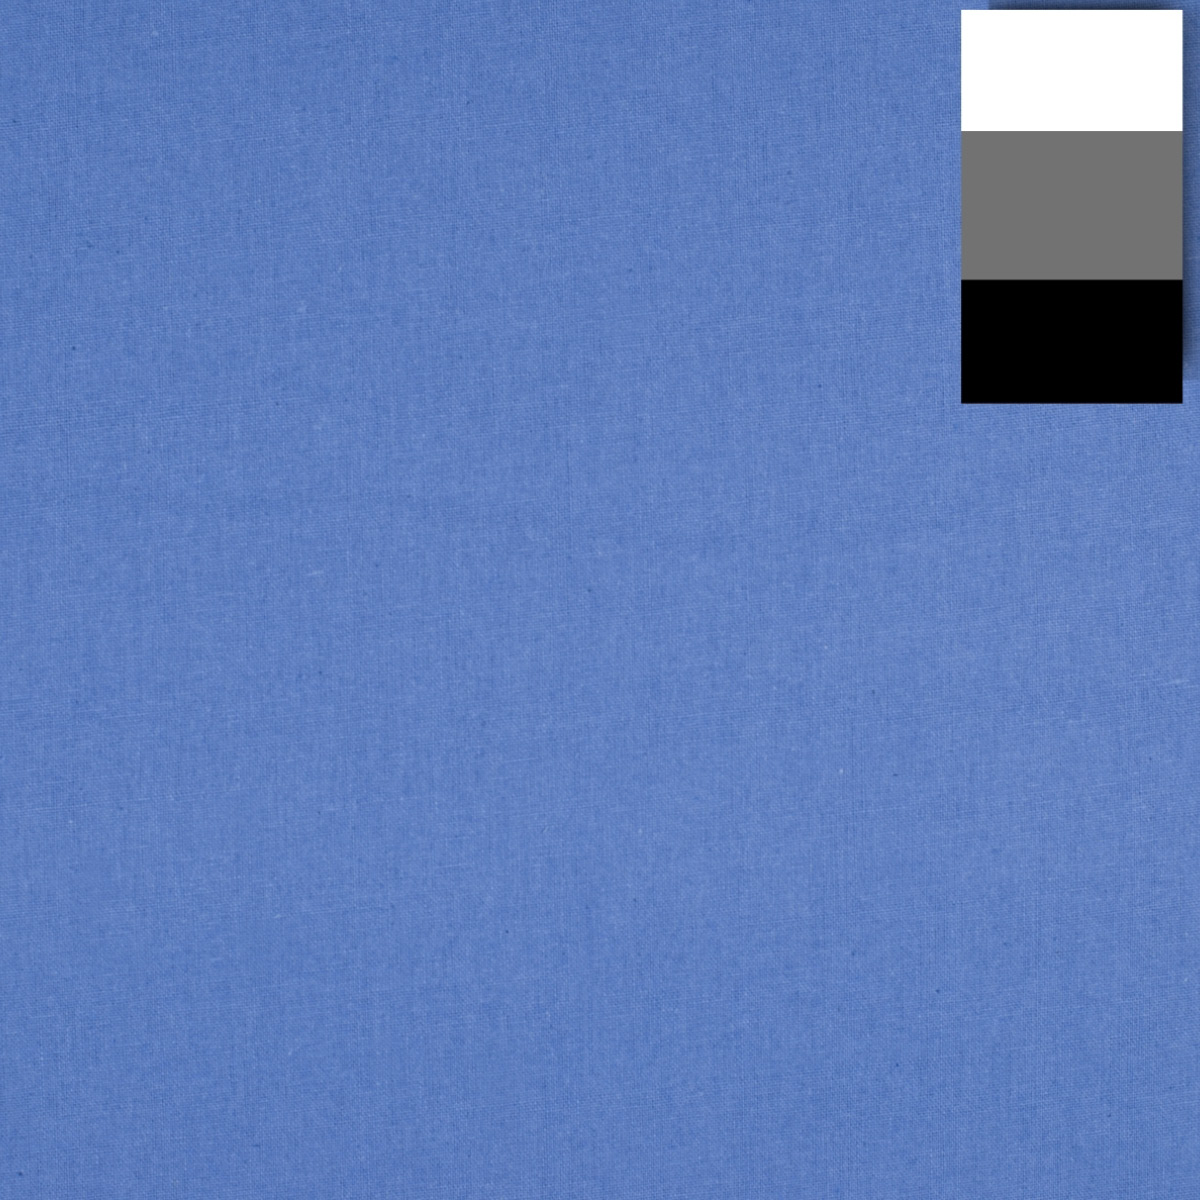 Walimex Stoffhintergrund 2,85 x 6 m, hellblau